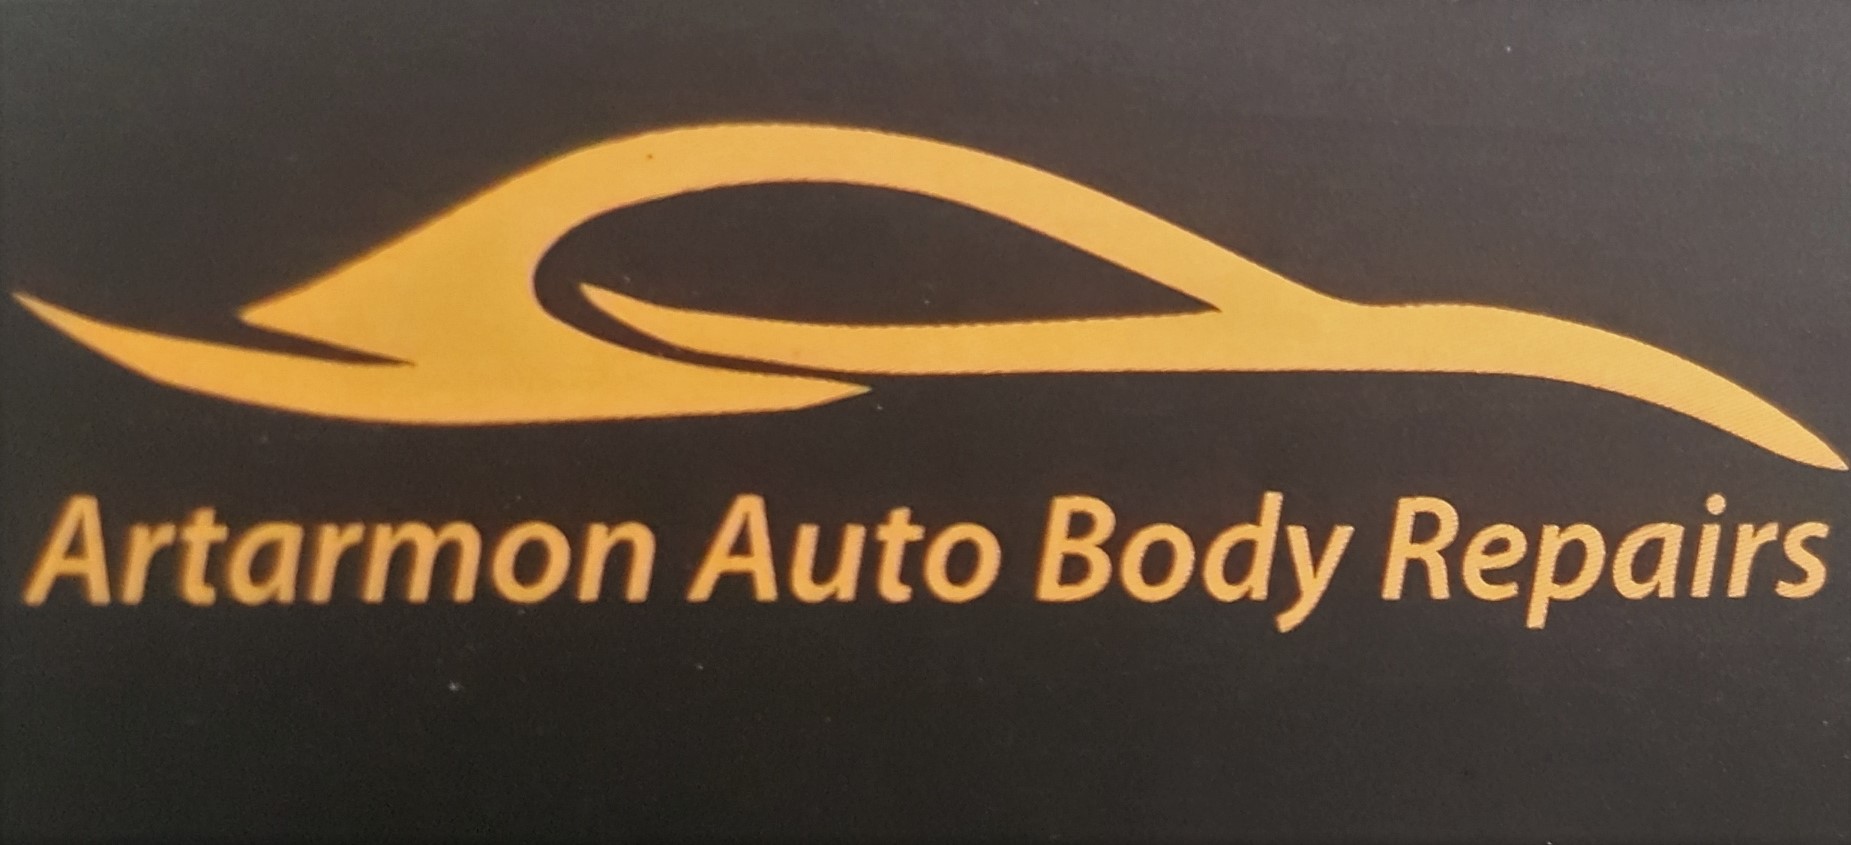 Artarmon Auto Body Repairs Logo